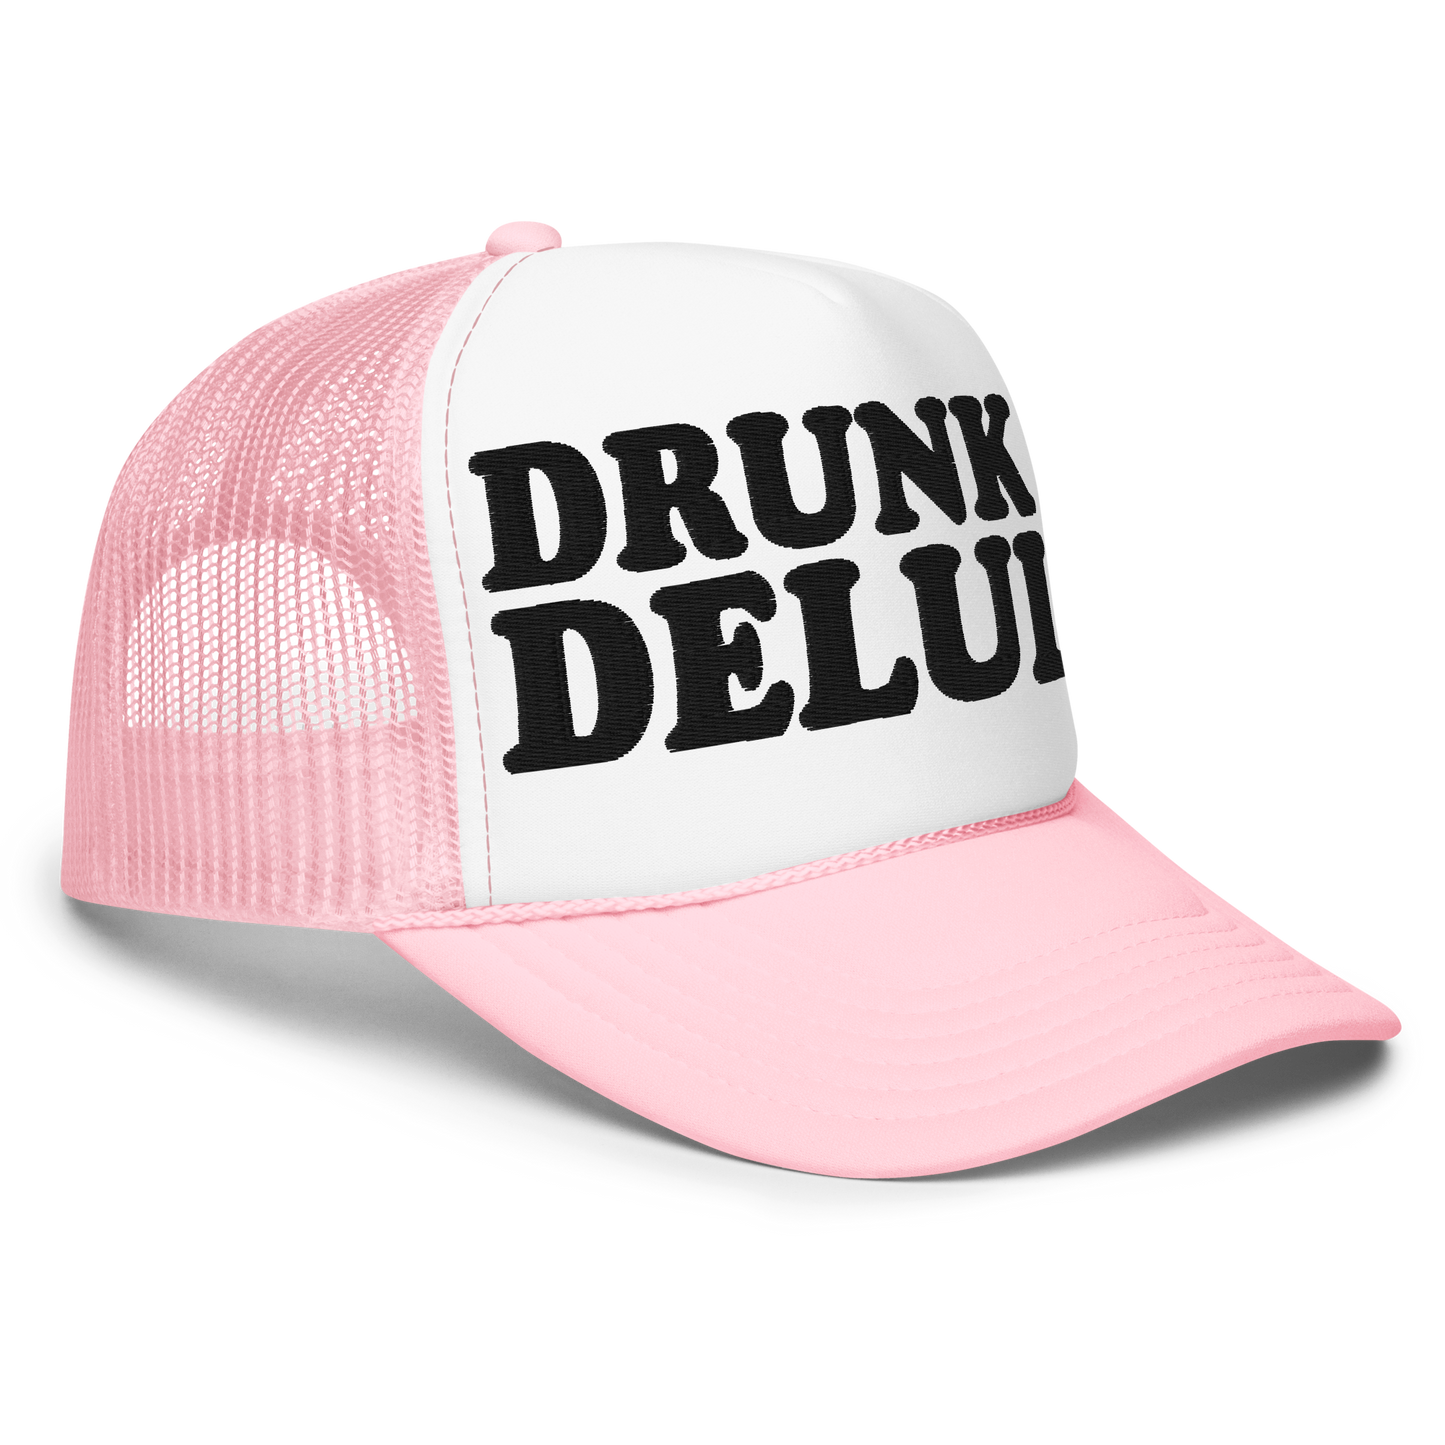 DRUNK AND DELULU hat SB